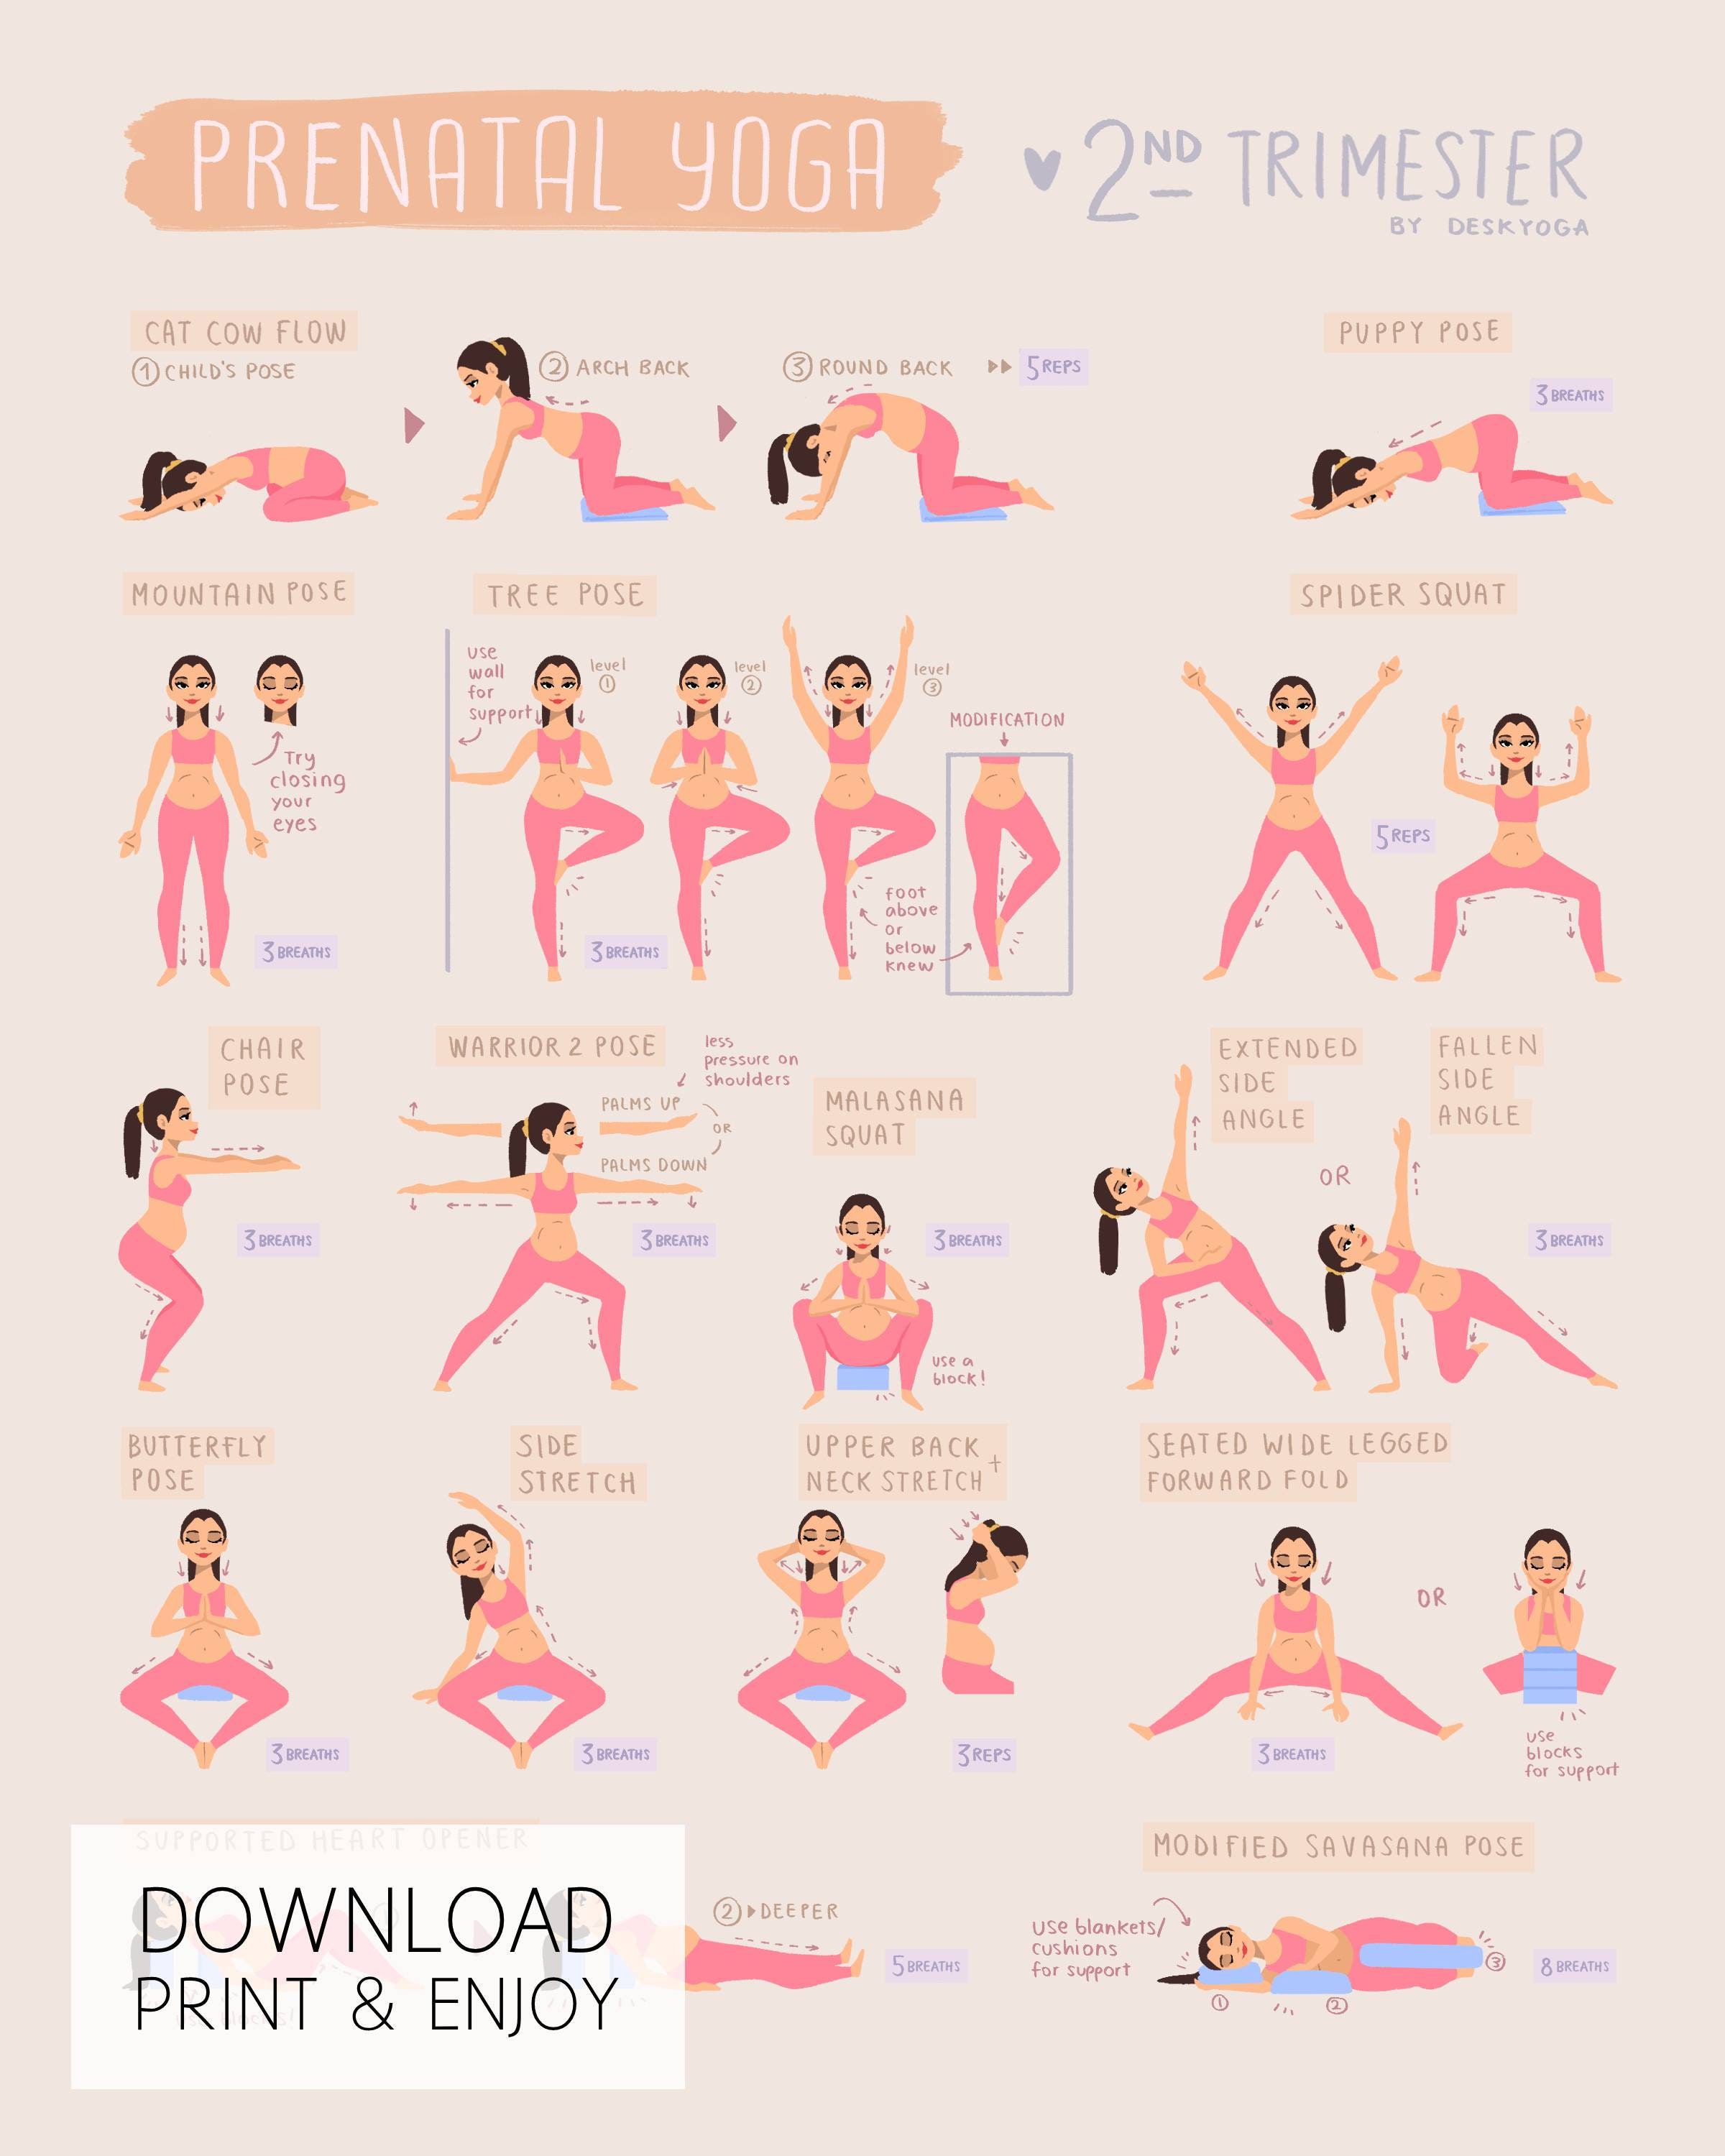 FREE Downloadable Pregnancy Yoga Lesson Plans | GeorgeWatts.org